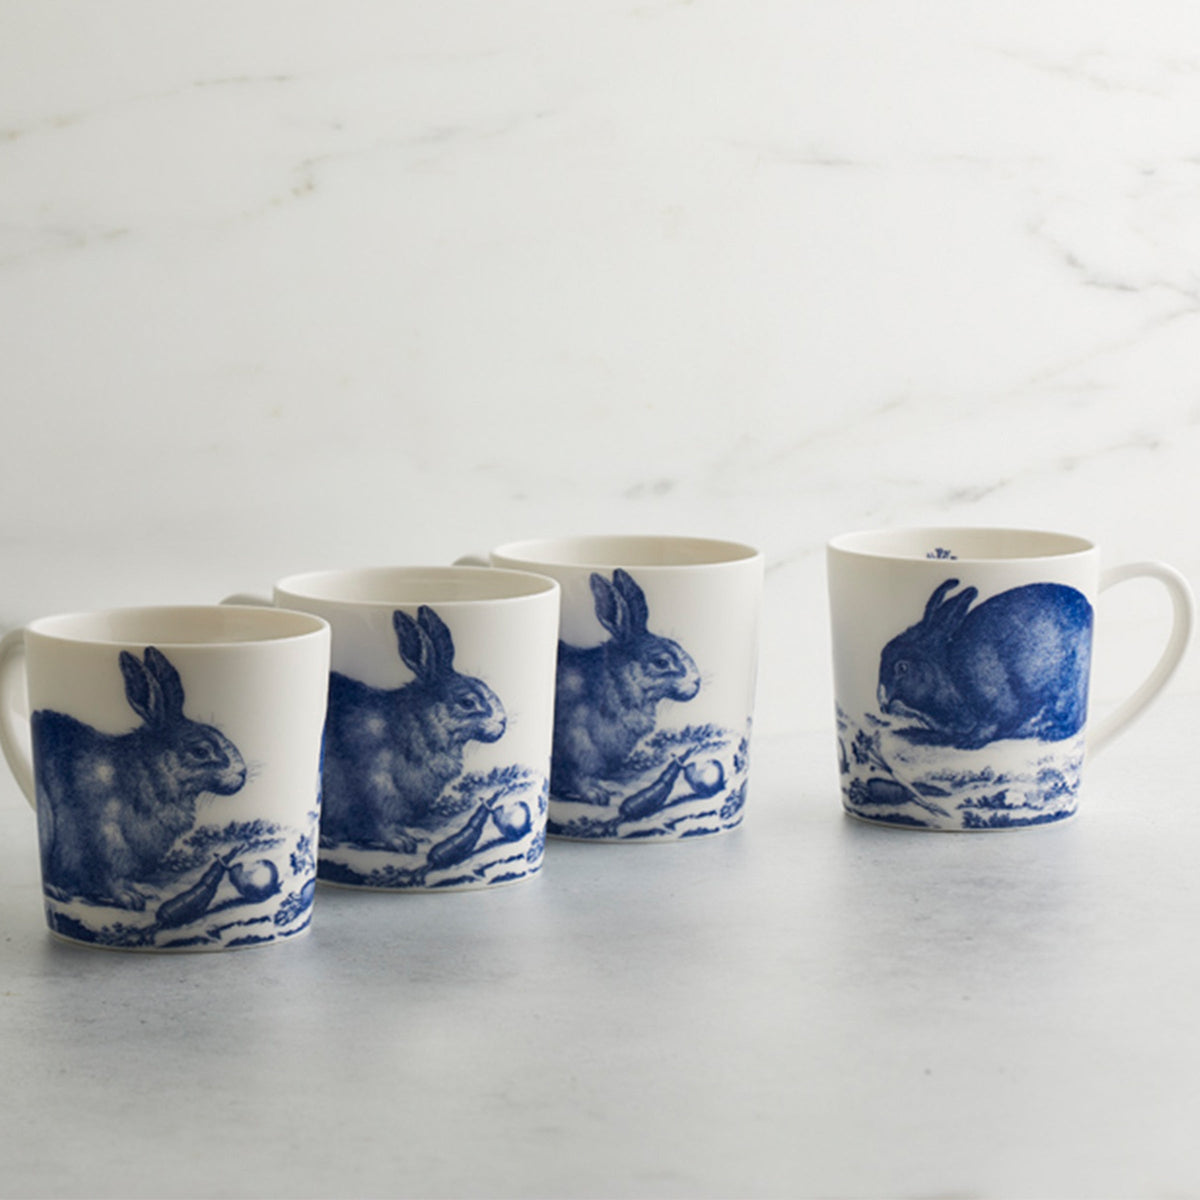 Four Blue Bunnies mugs by Caskata Artisanal Home, microwave-safe.